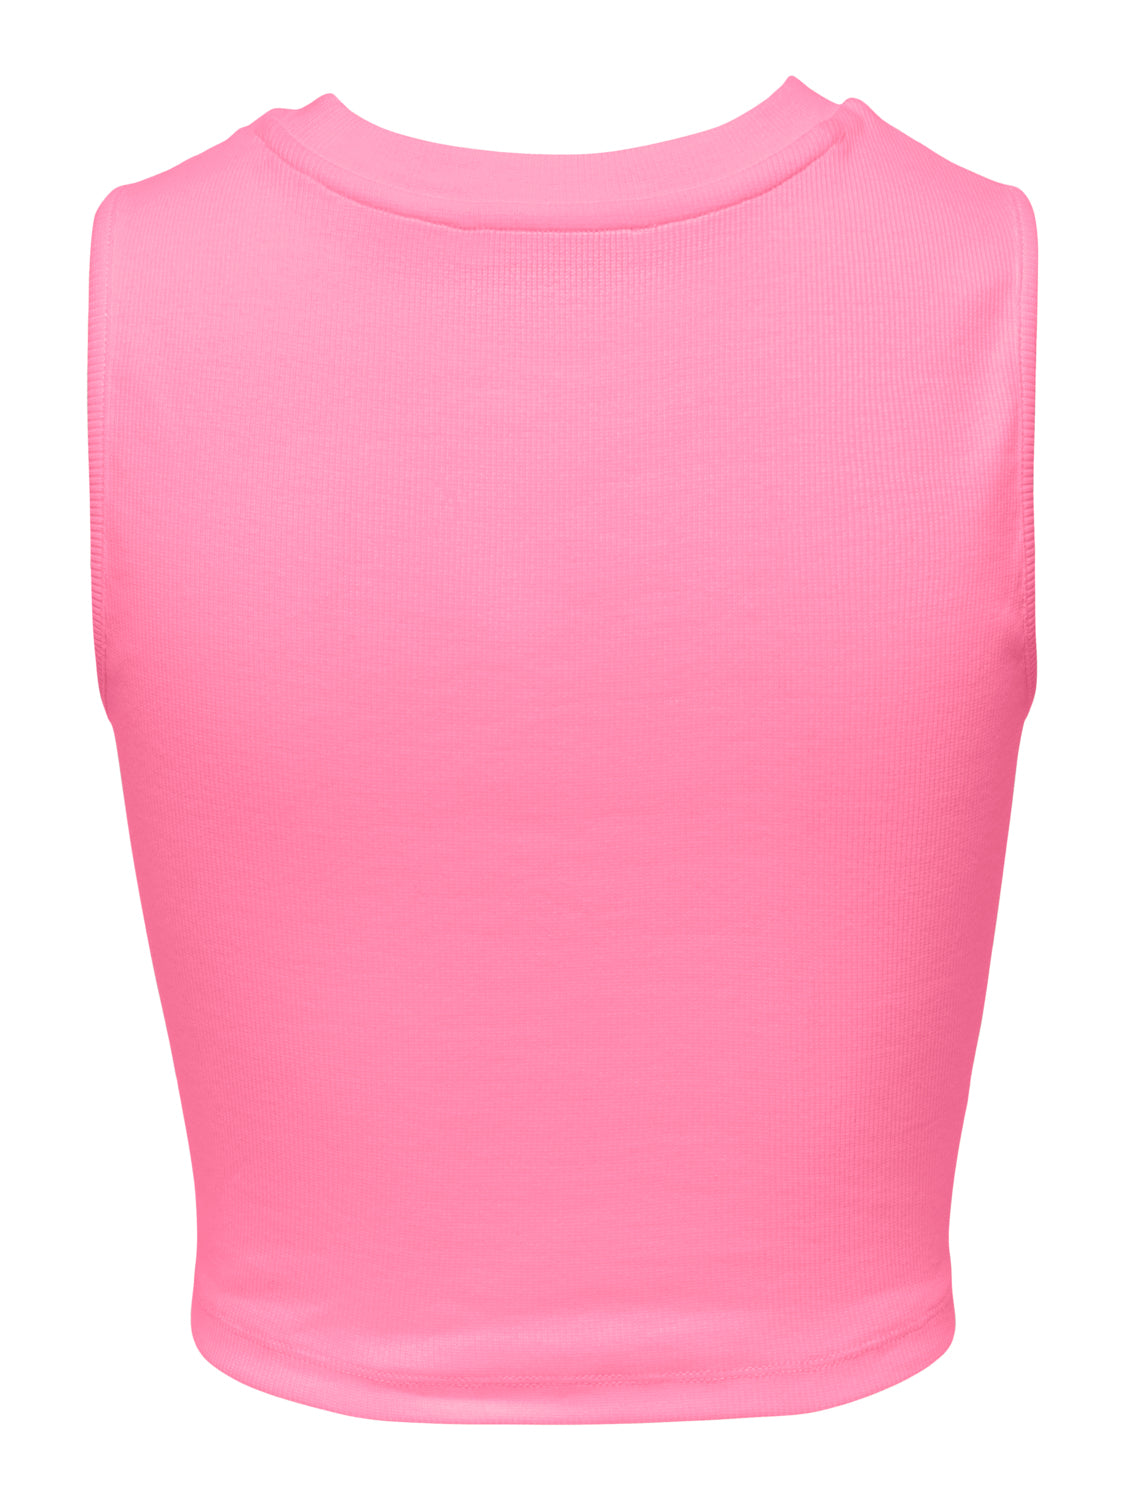 PGNUSSA T-Shirts & Tops – Sachet Pink